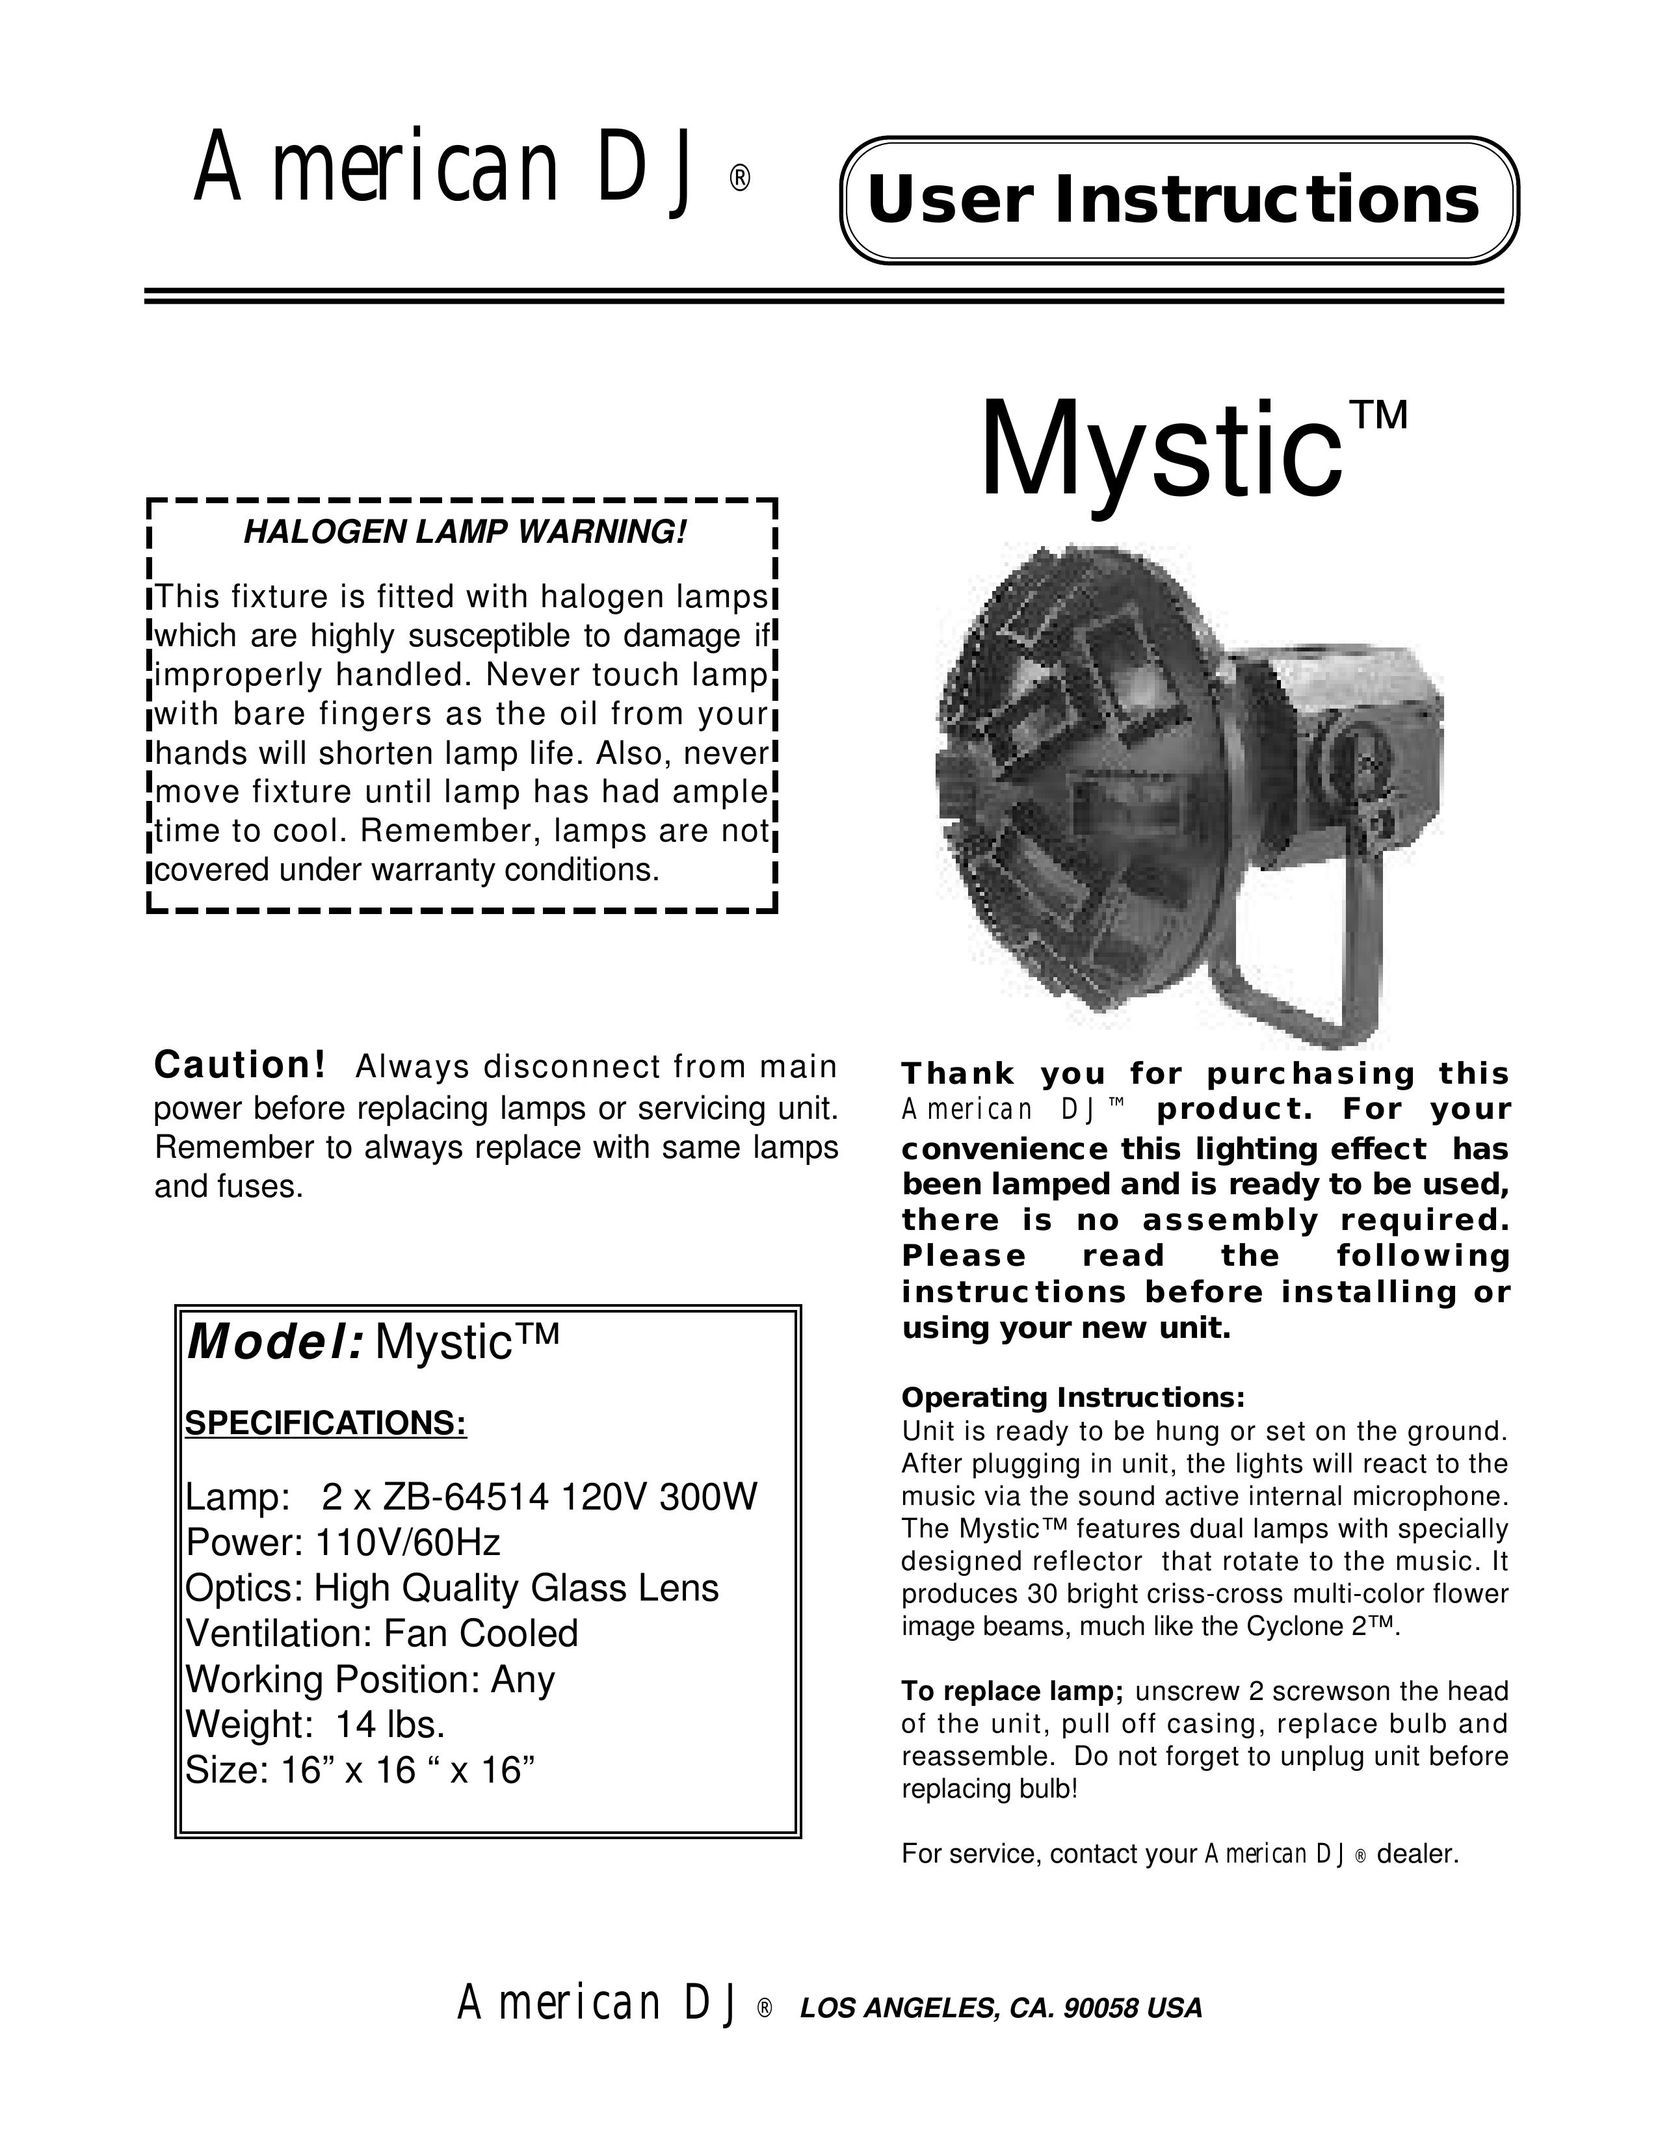 American DJ Mystic Work Light User Manual